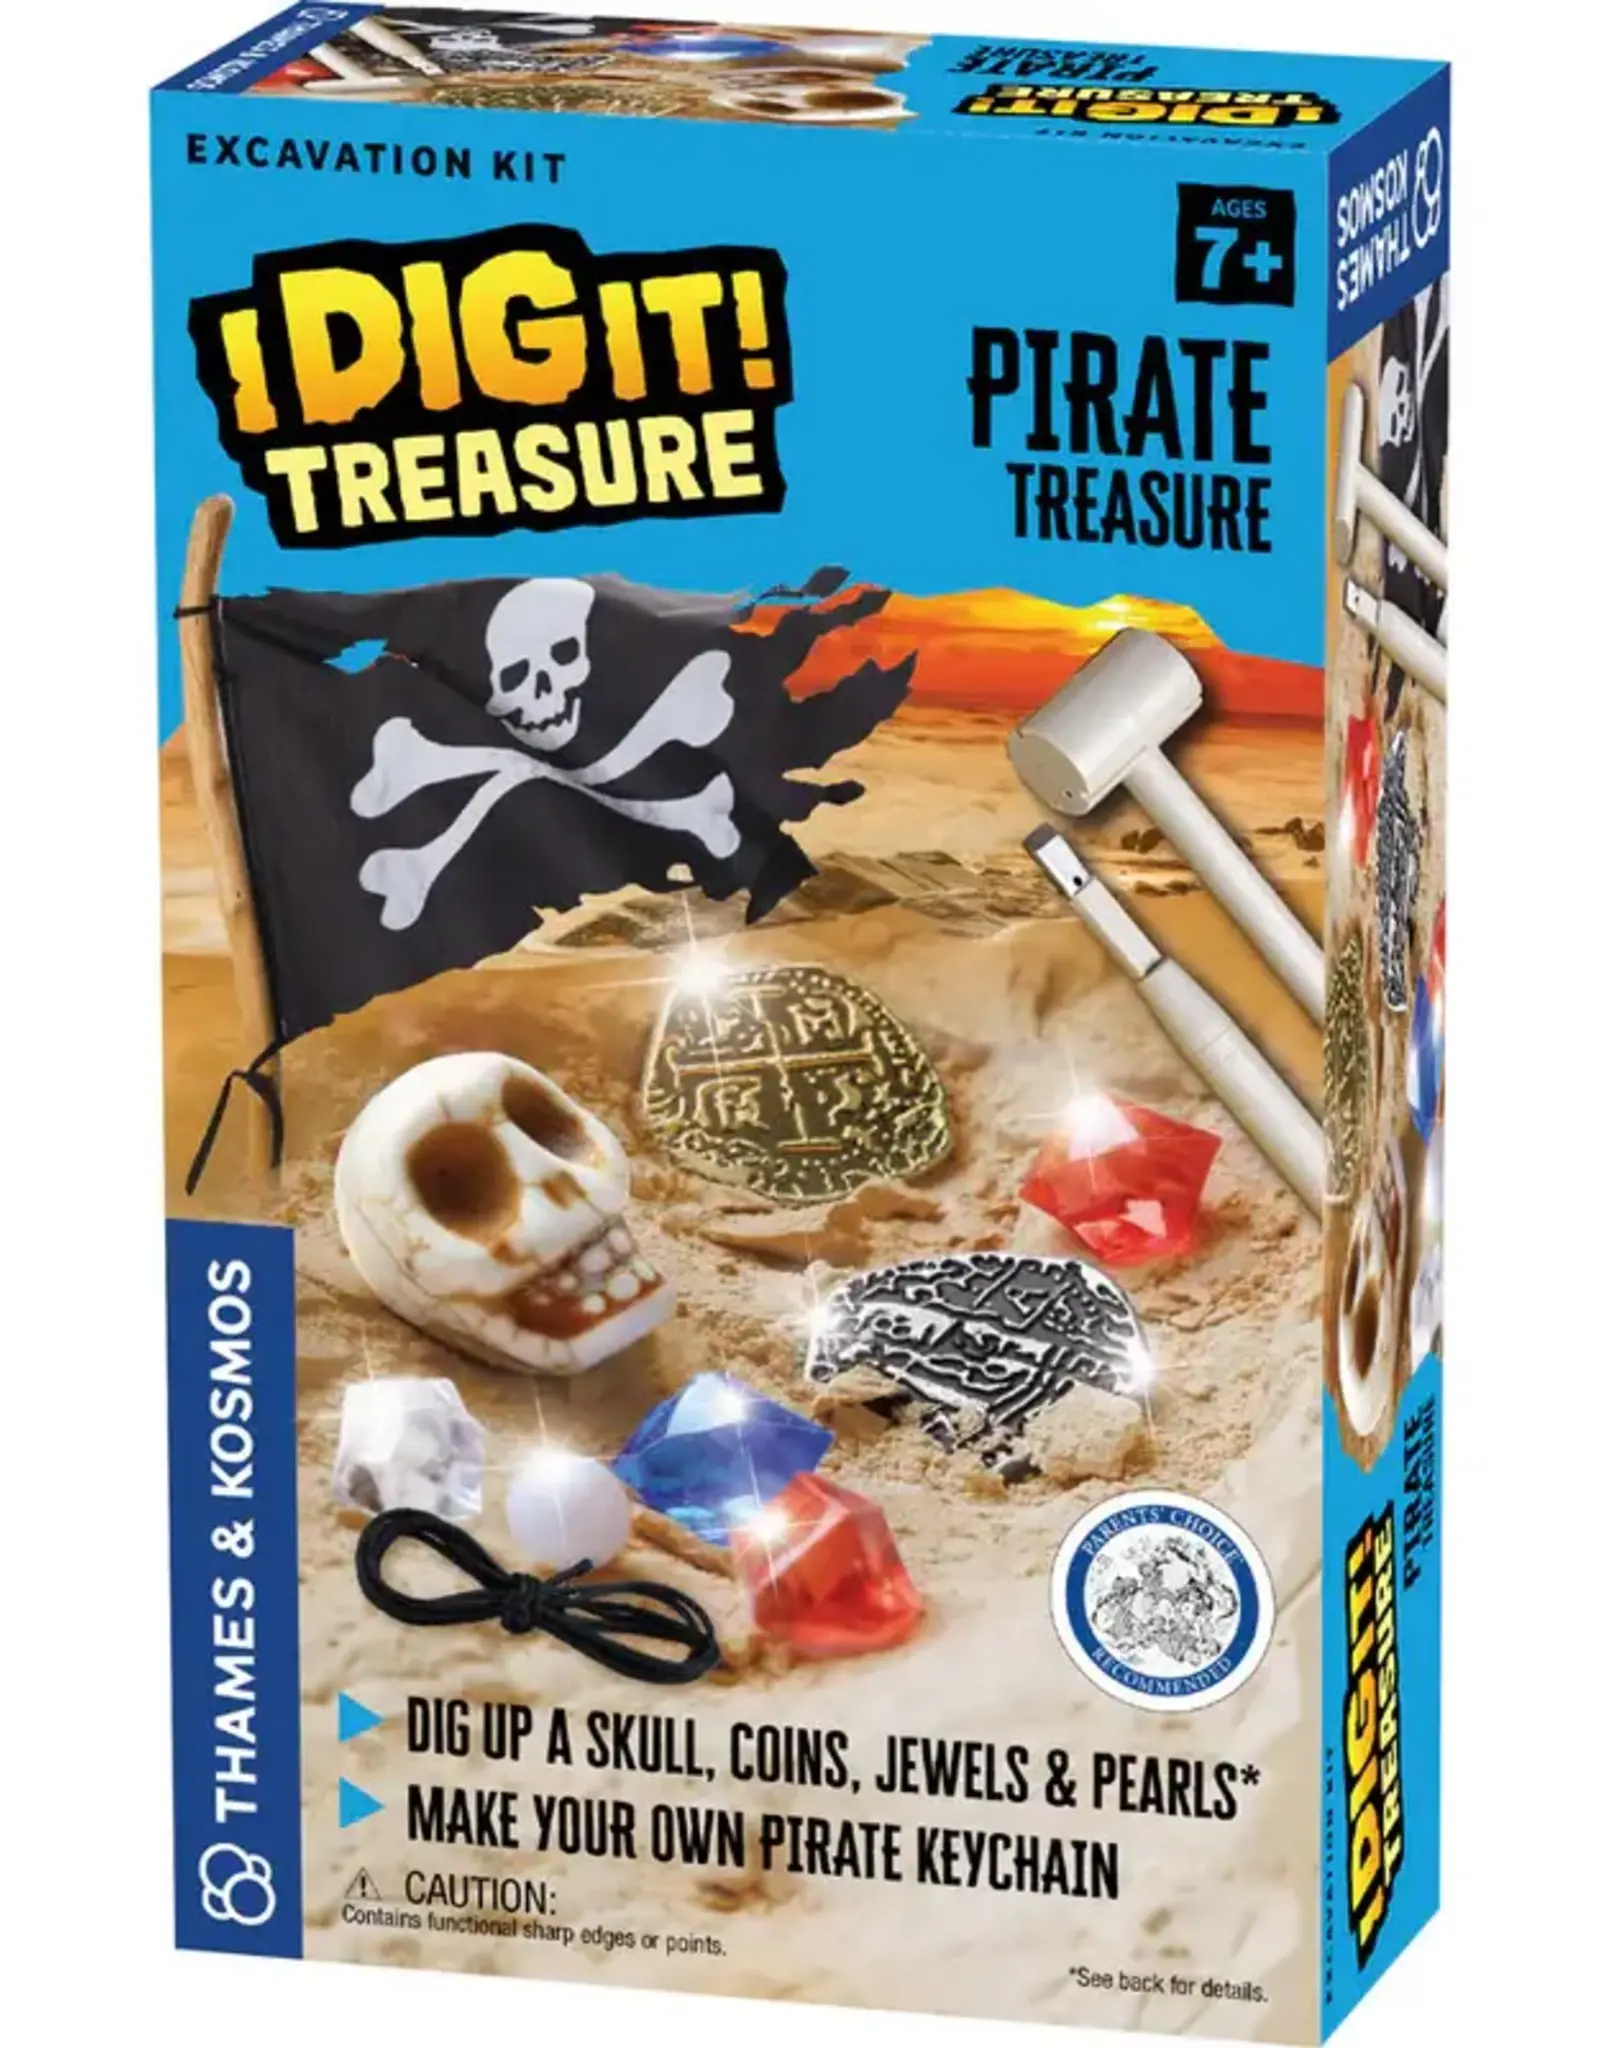 THAMES & KOSMOS I Dig It! Treasure - Pirate Treasure